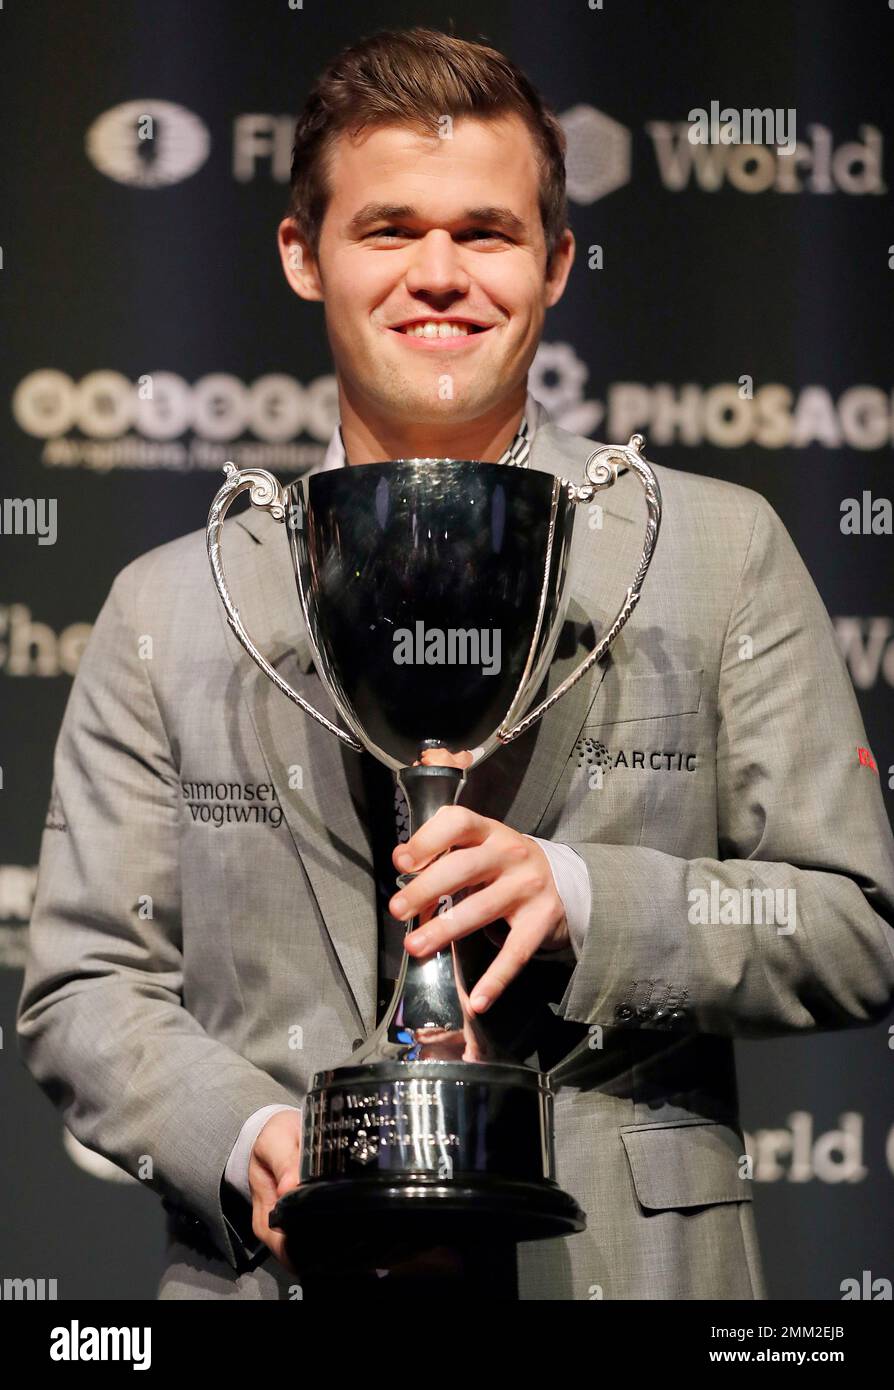 Magnus Carlsen Retains His World Champion's Title